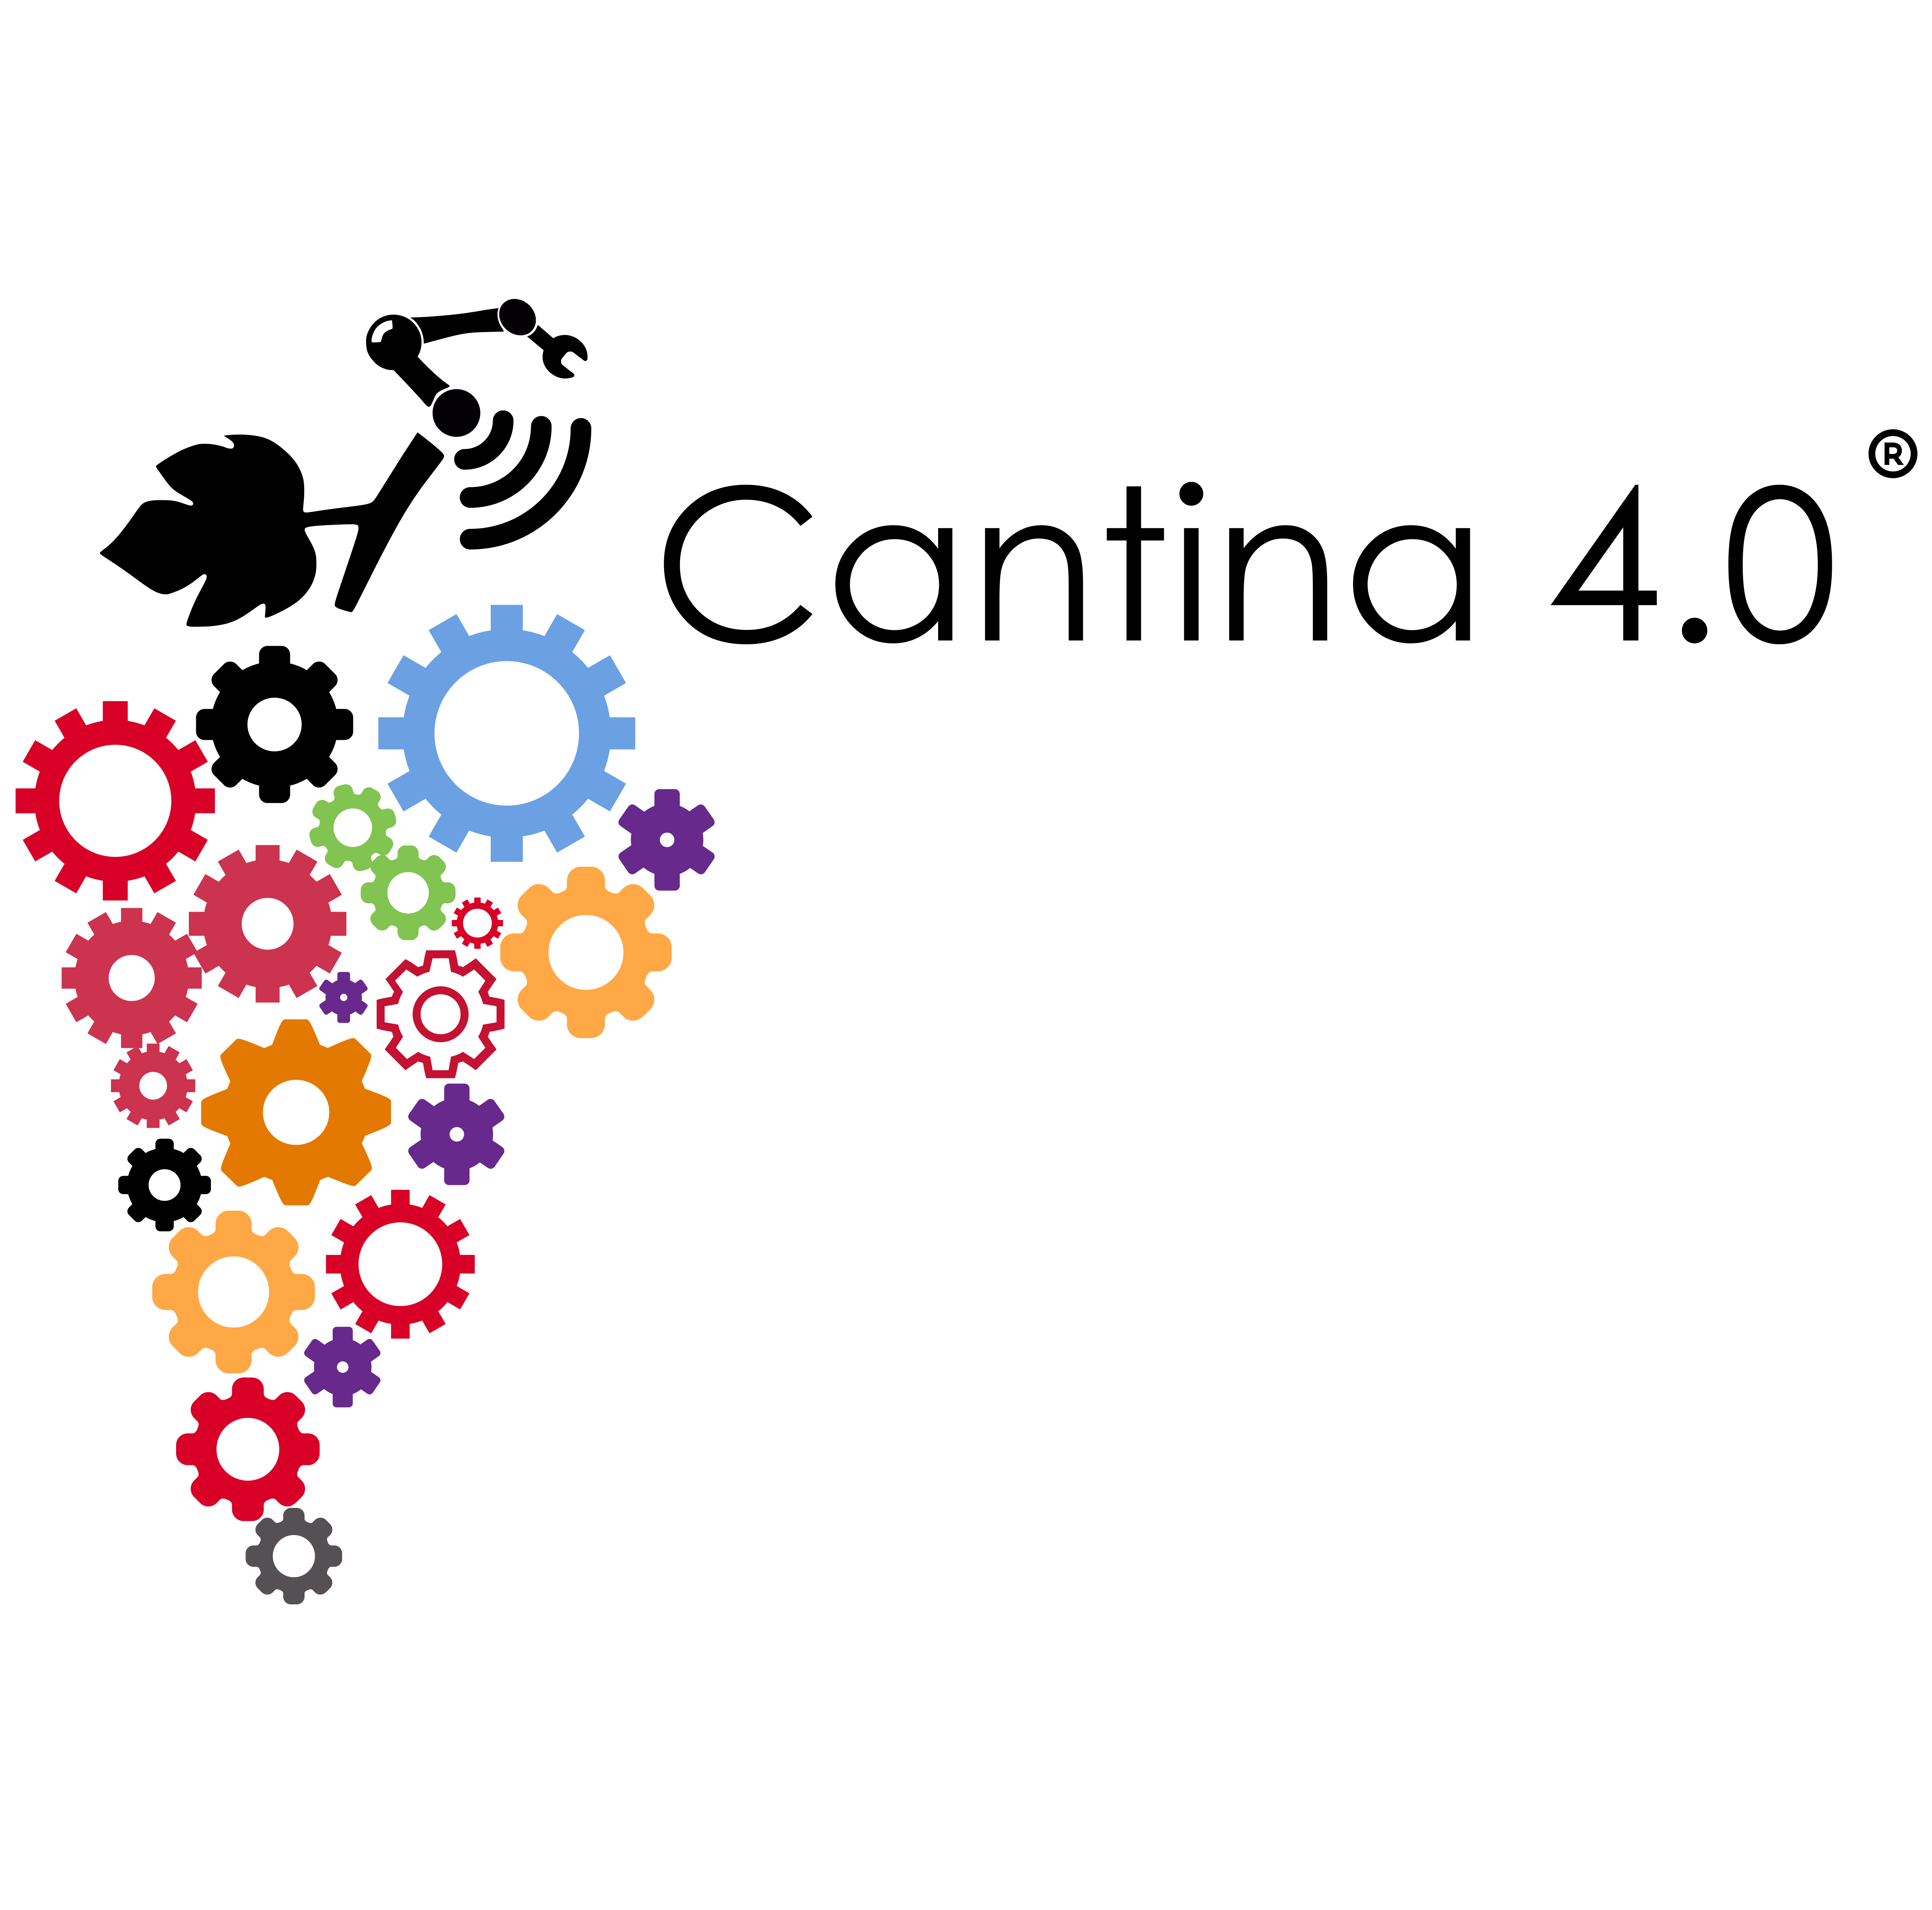 Cantina 4.0 - startup Innovativa - Cantina - Industria 4.0 e Vino